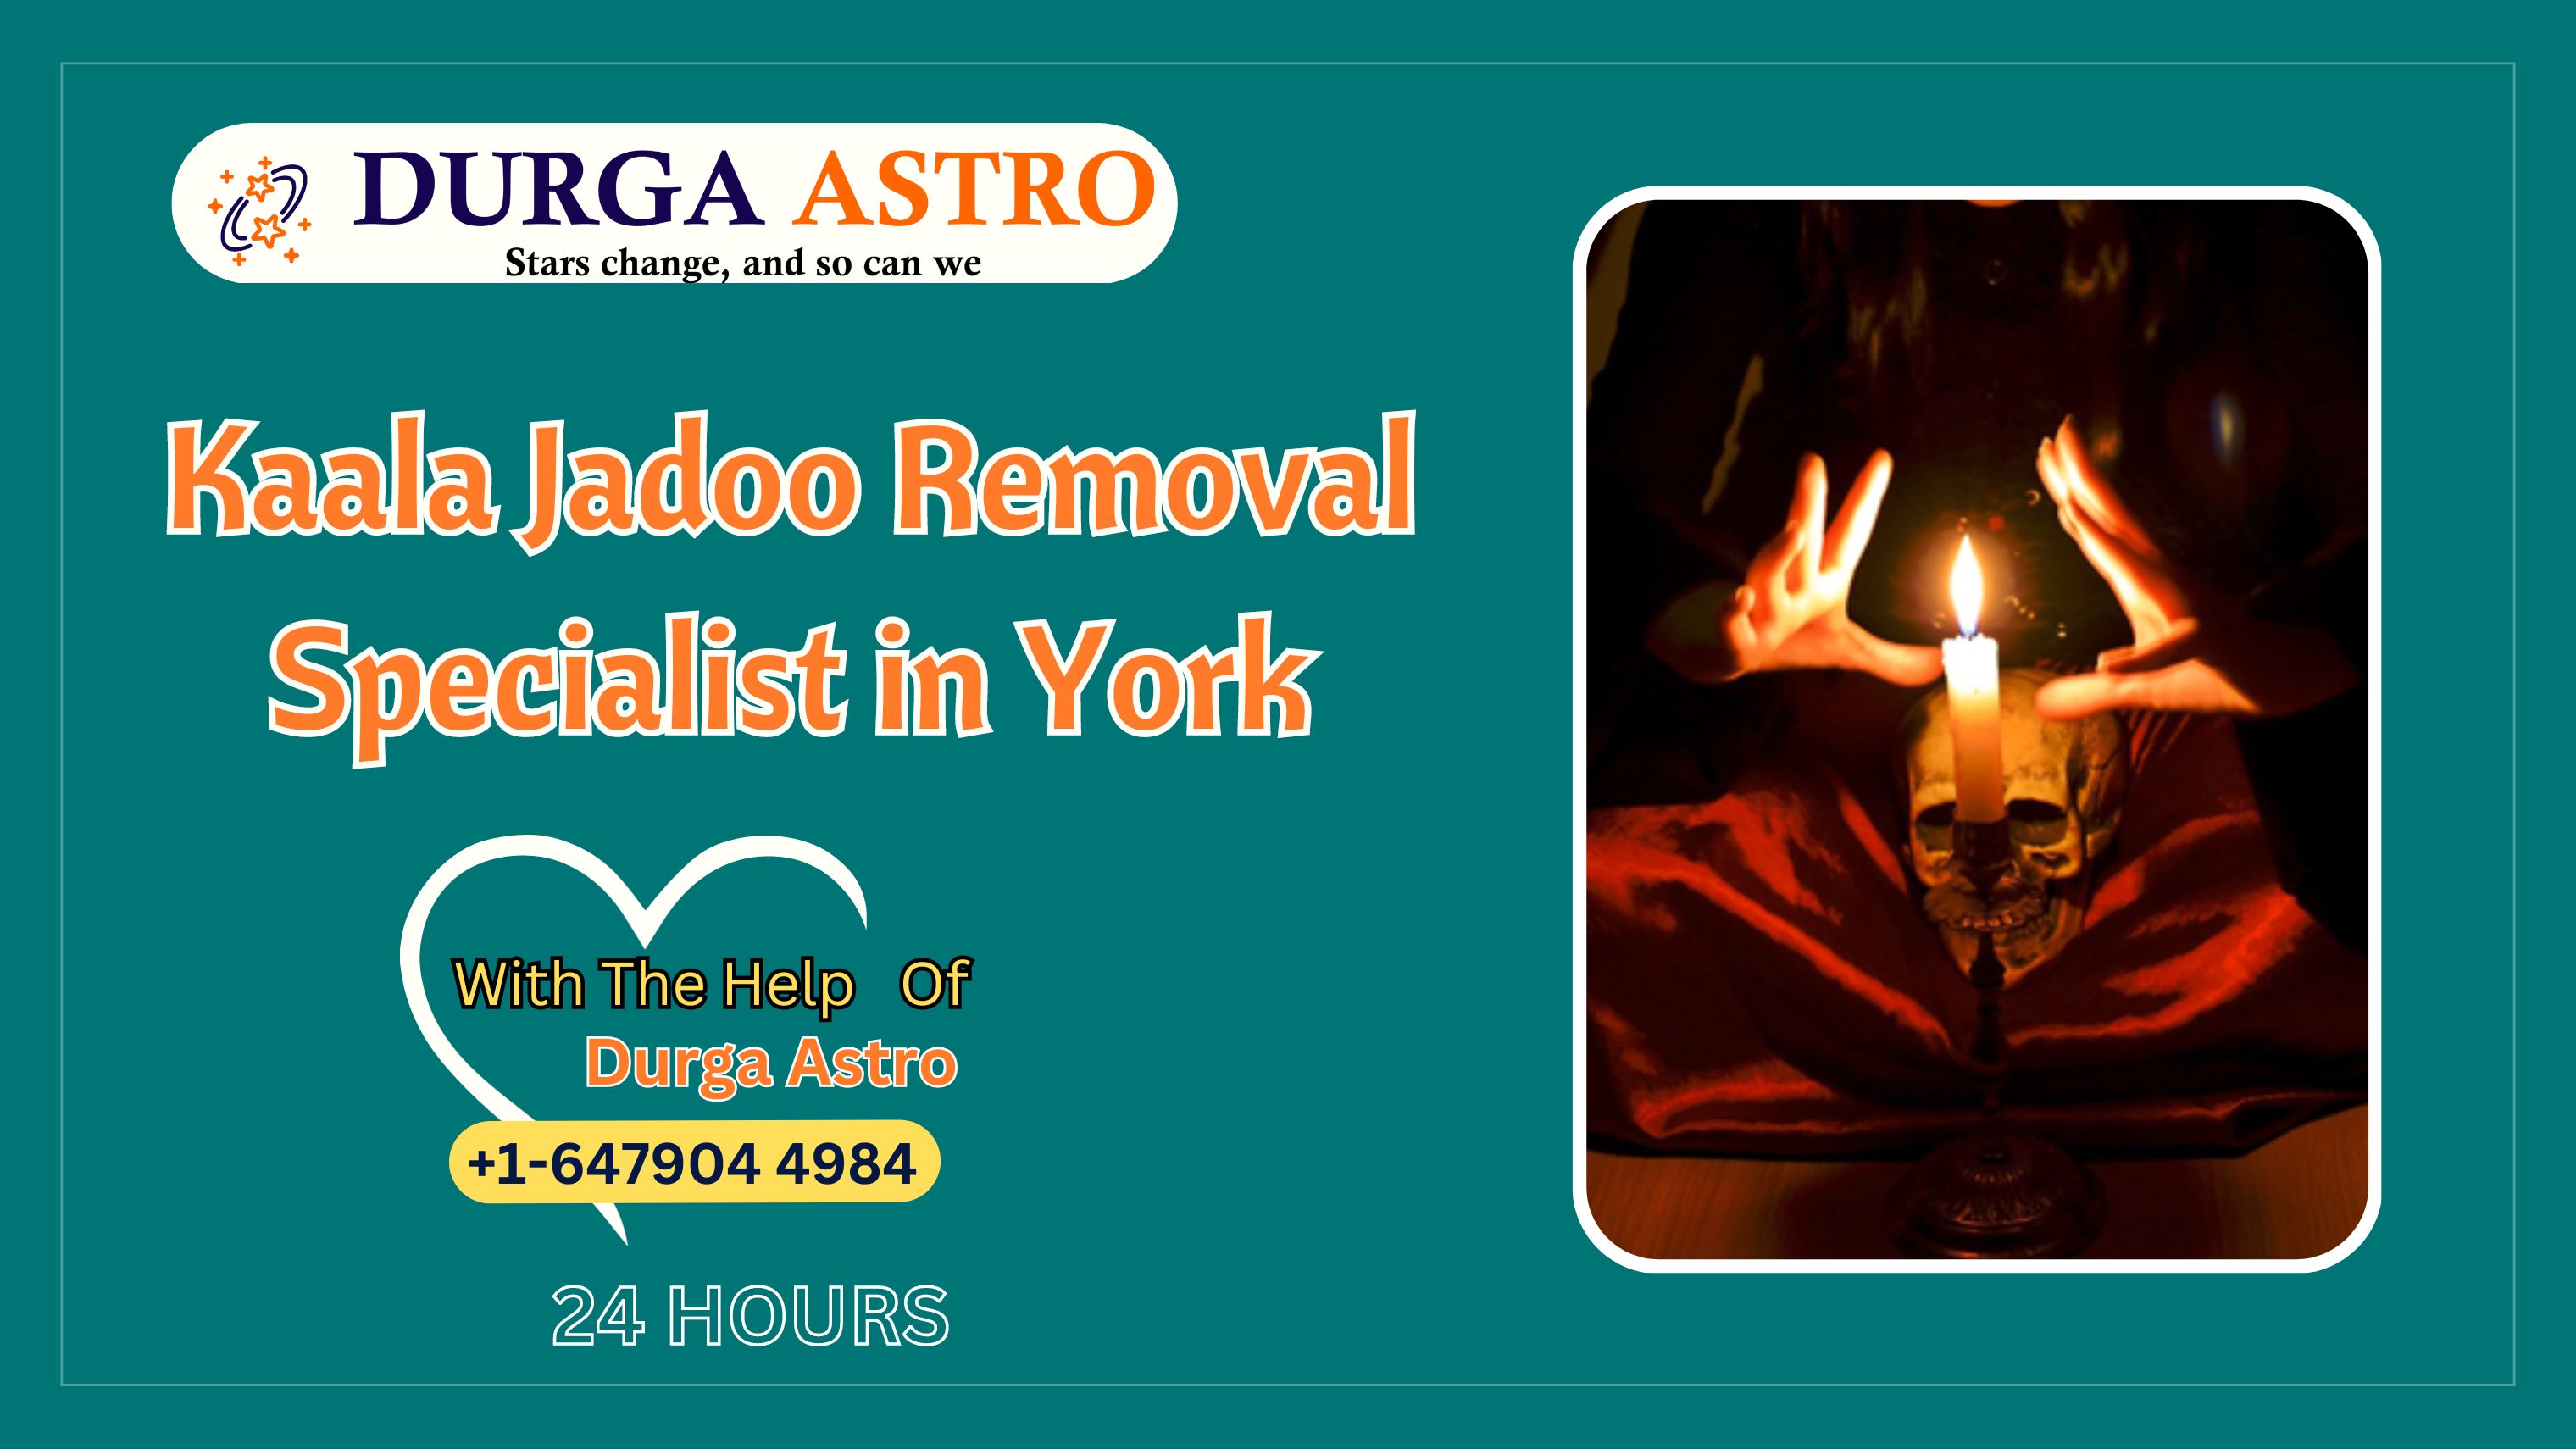 Kalaa Jadoo Removal Specialist in York